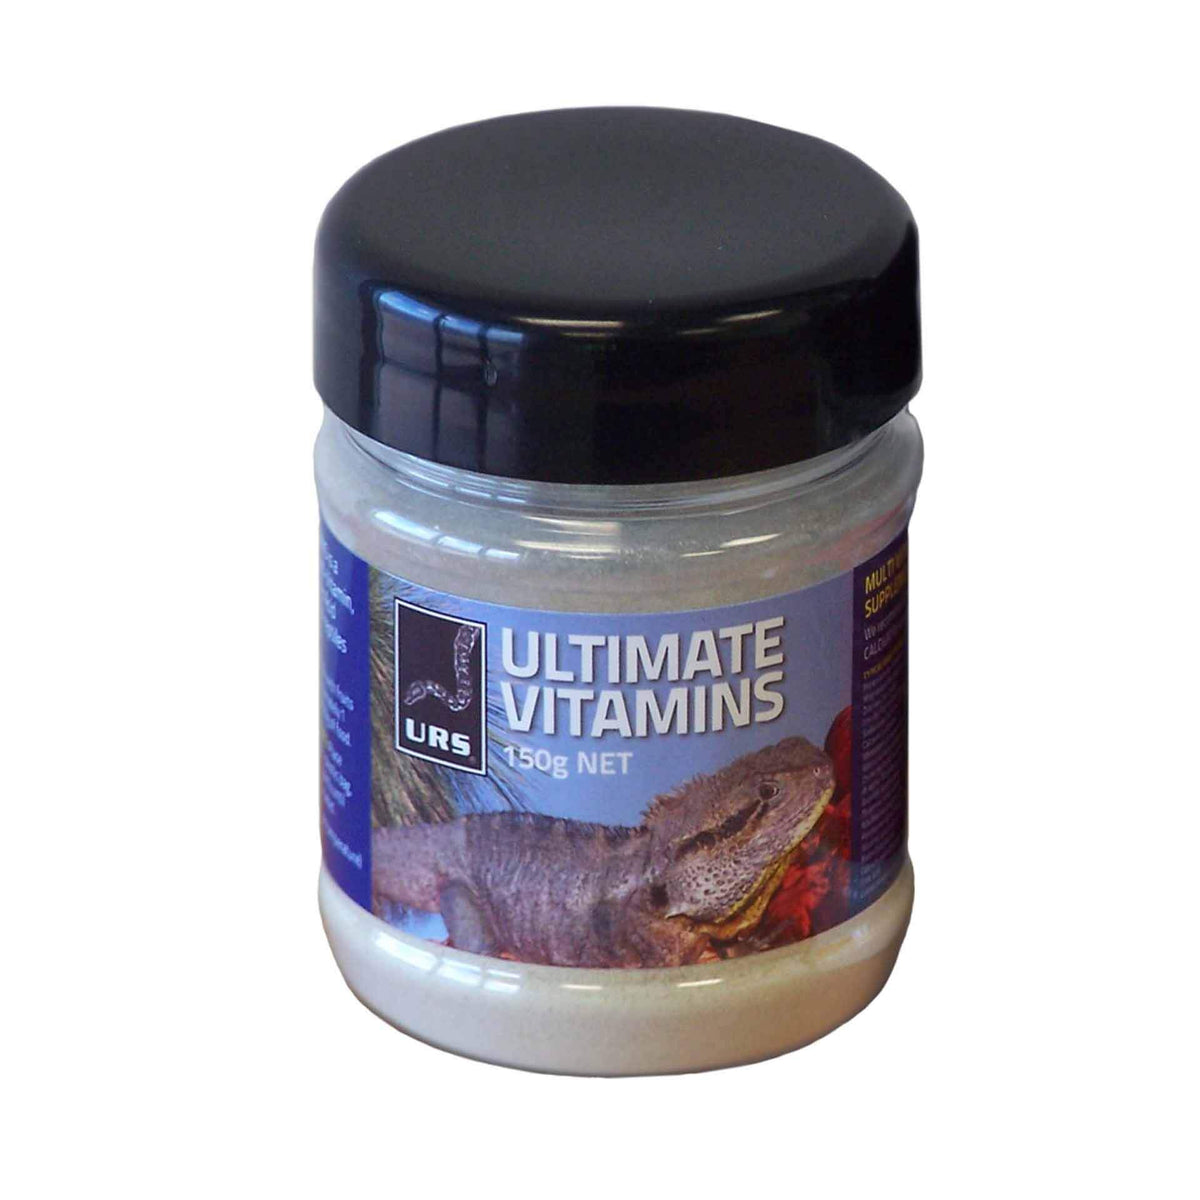 URS Ultimate Vitamins - 150g